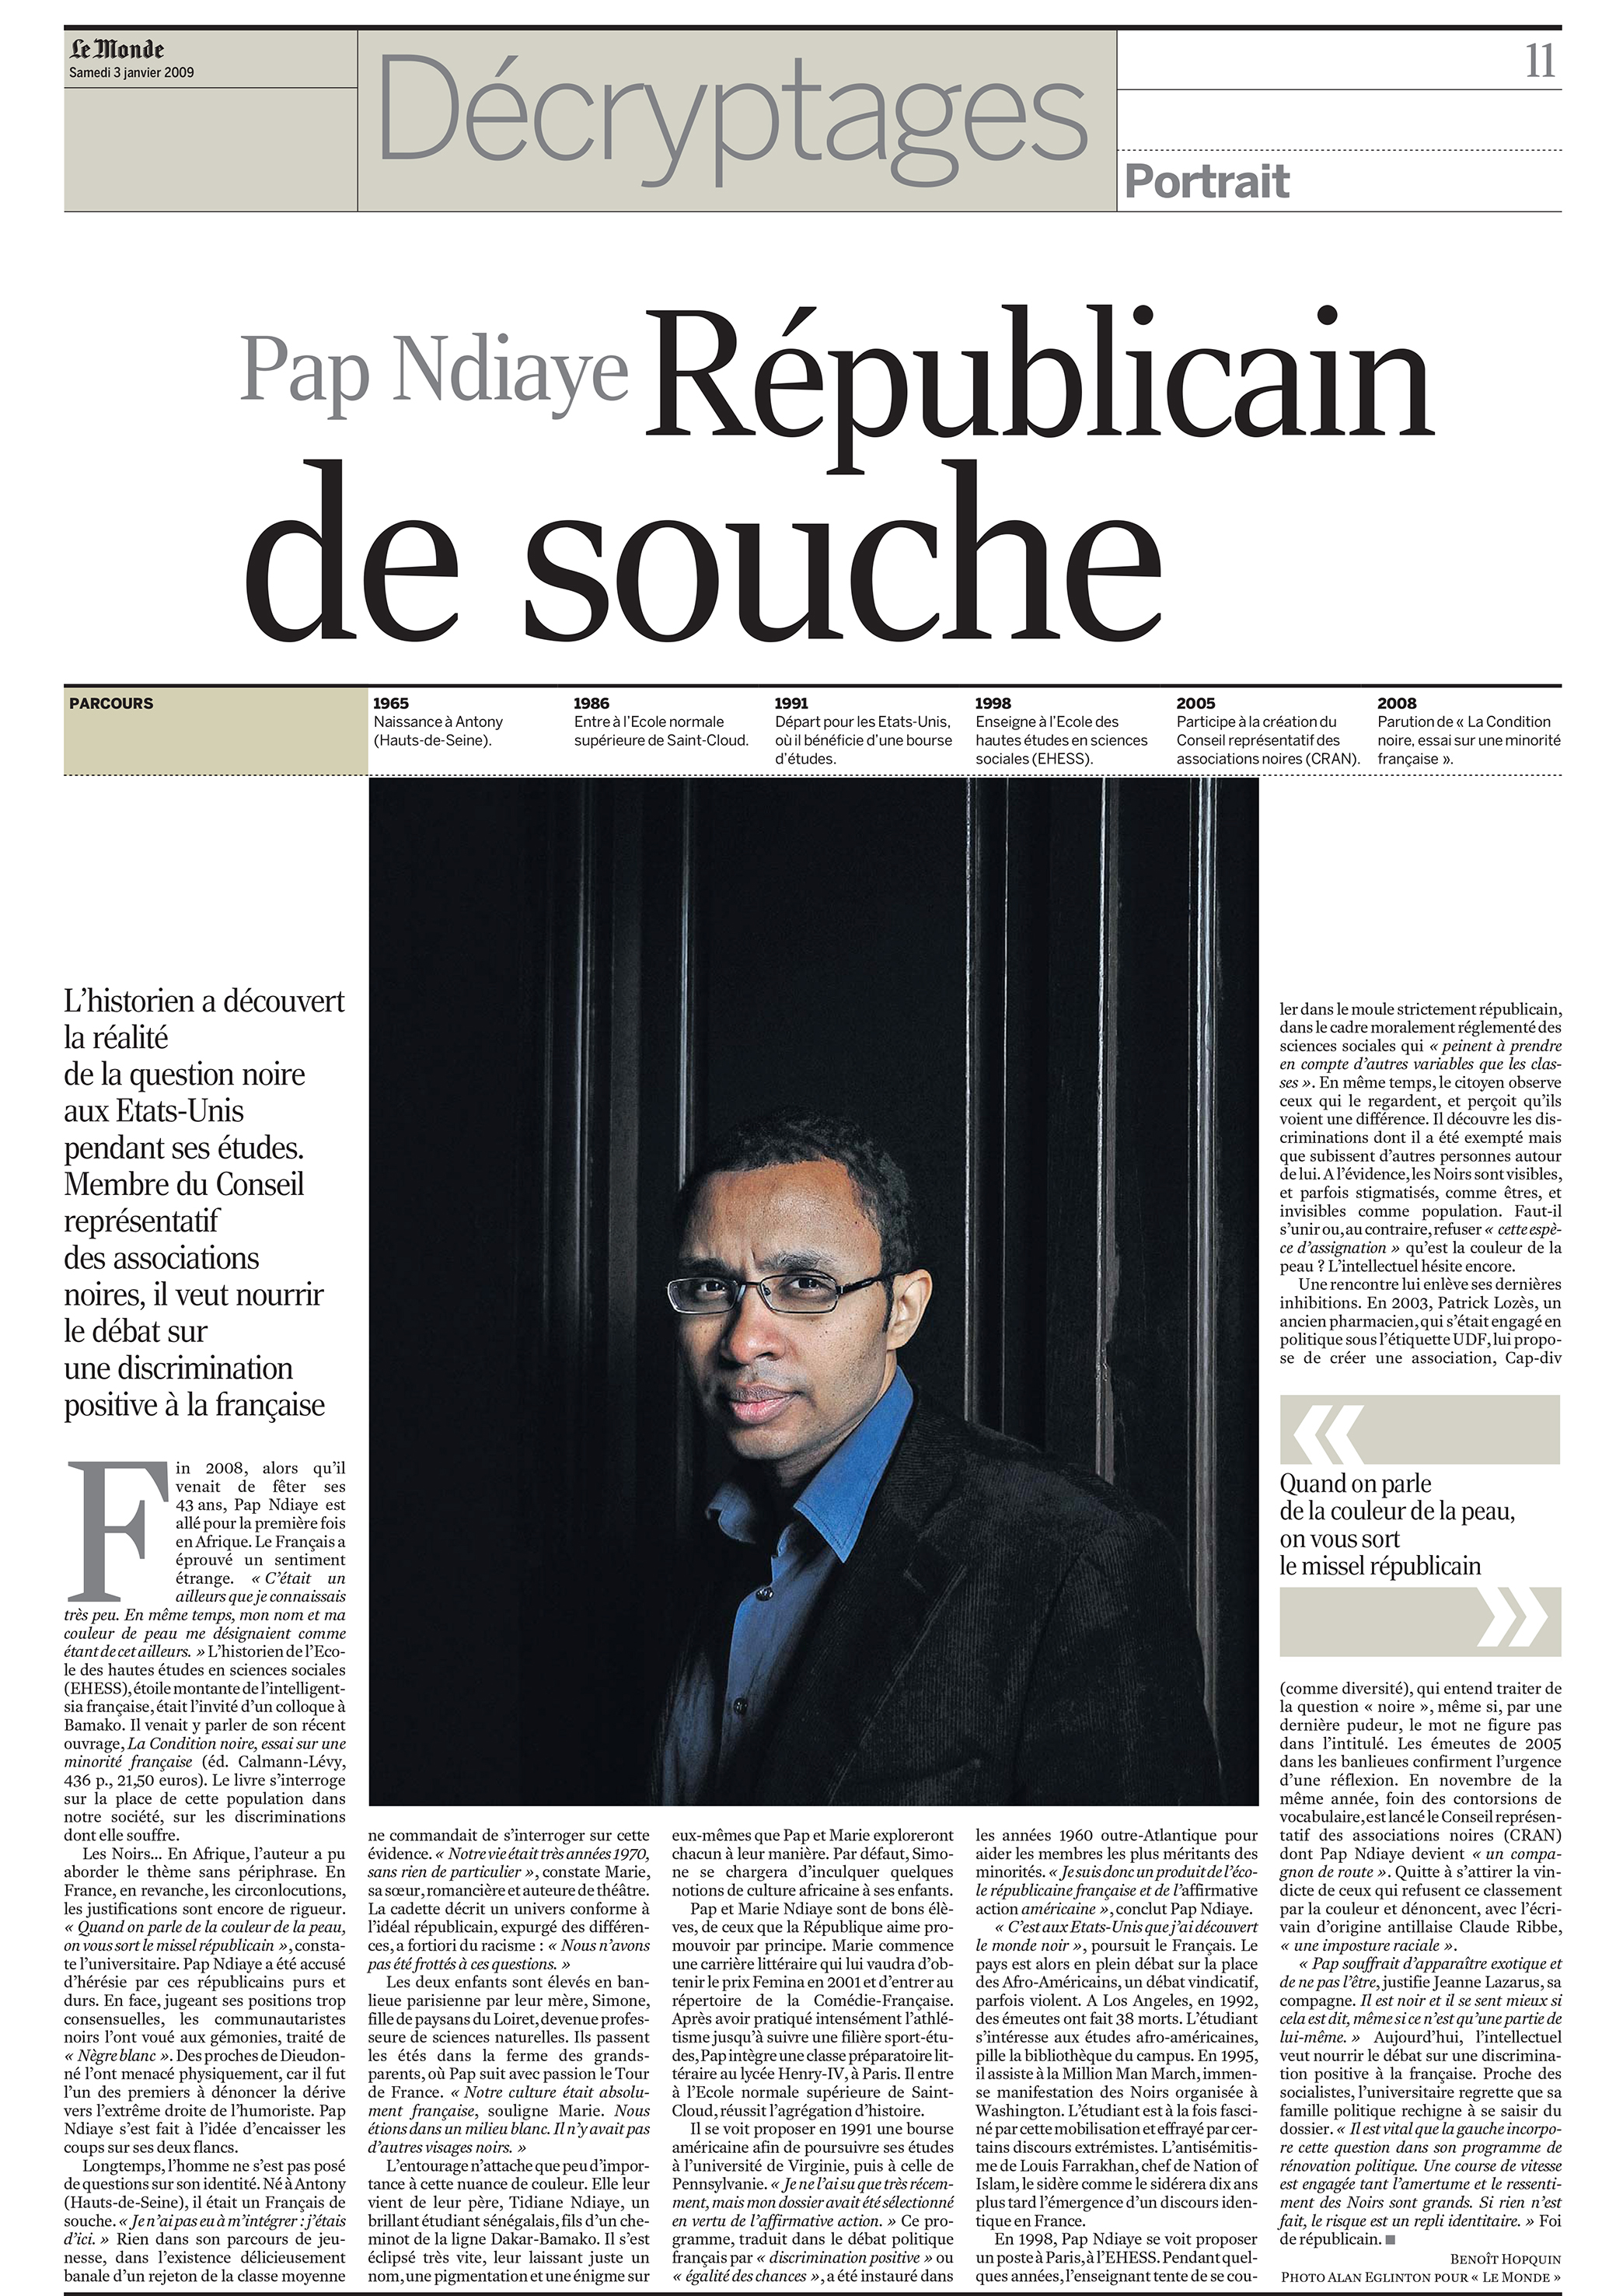  Pap Ndiaye, writer For  Le Monde  newspaper 